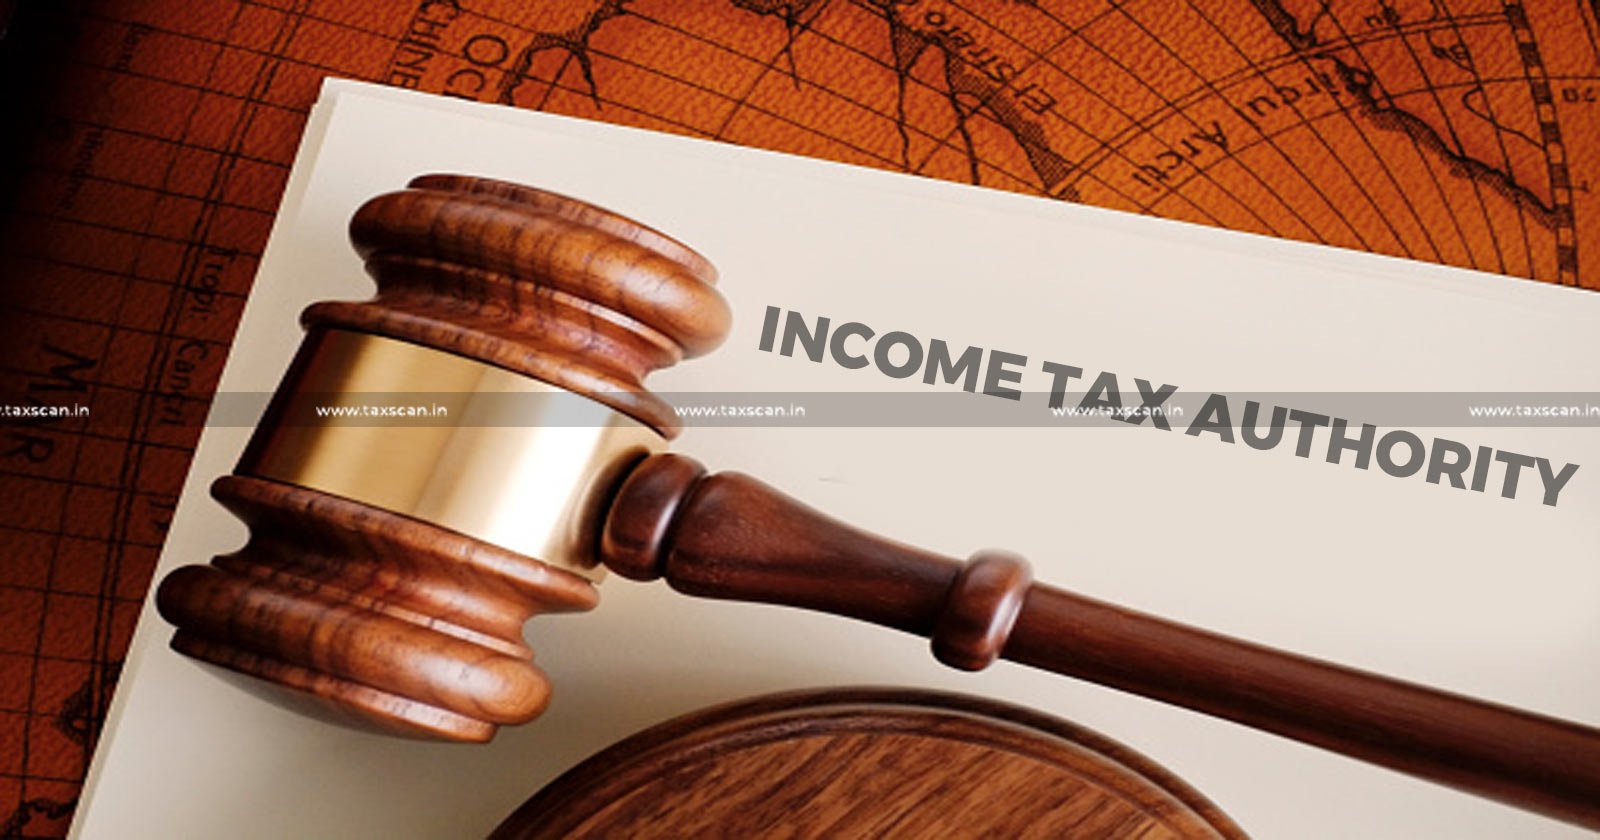 Income Tax Authorities - Trust - Shiv Sena - Shiv Sena MP - Shiv Sena MP Amid - taxscan